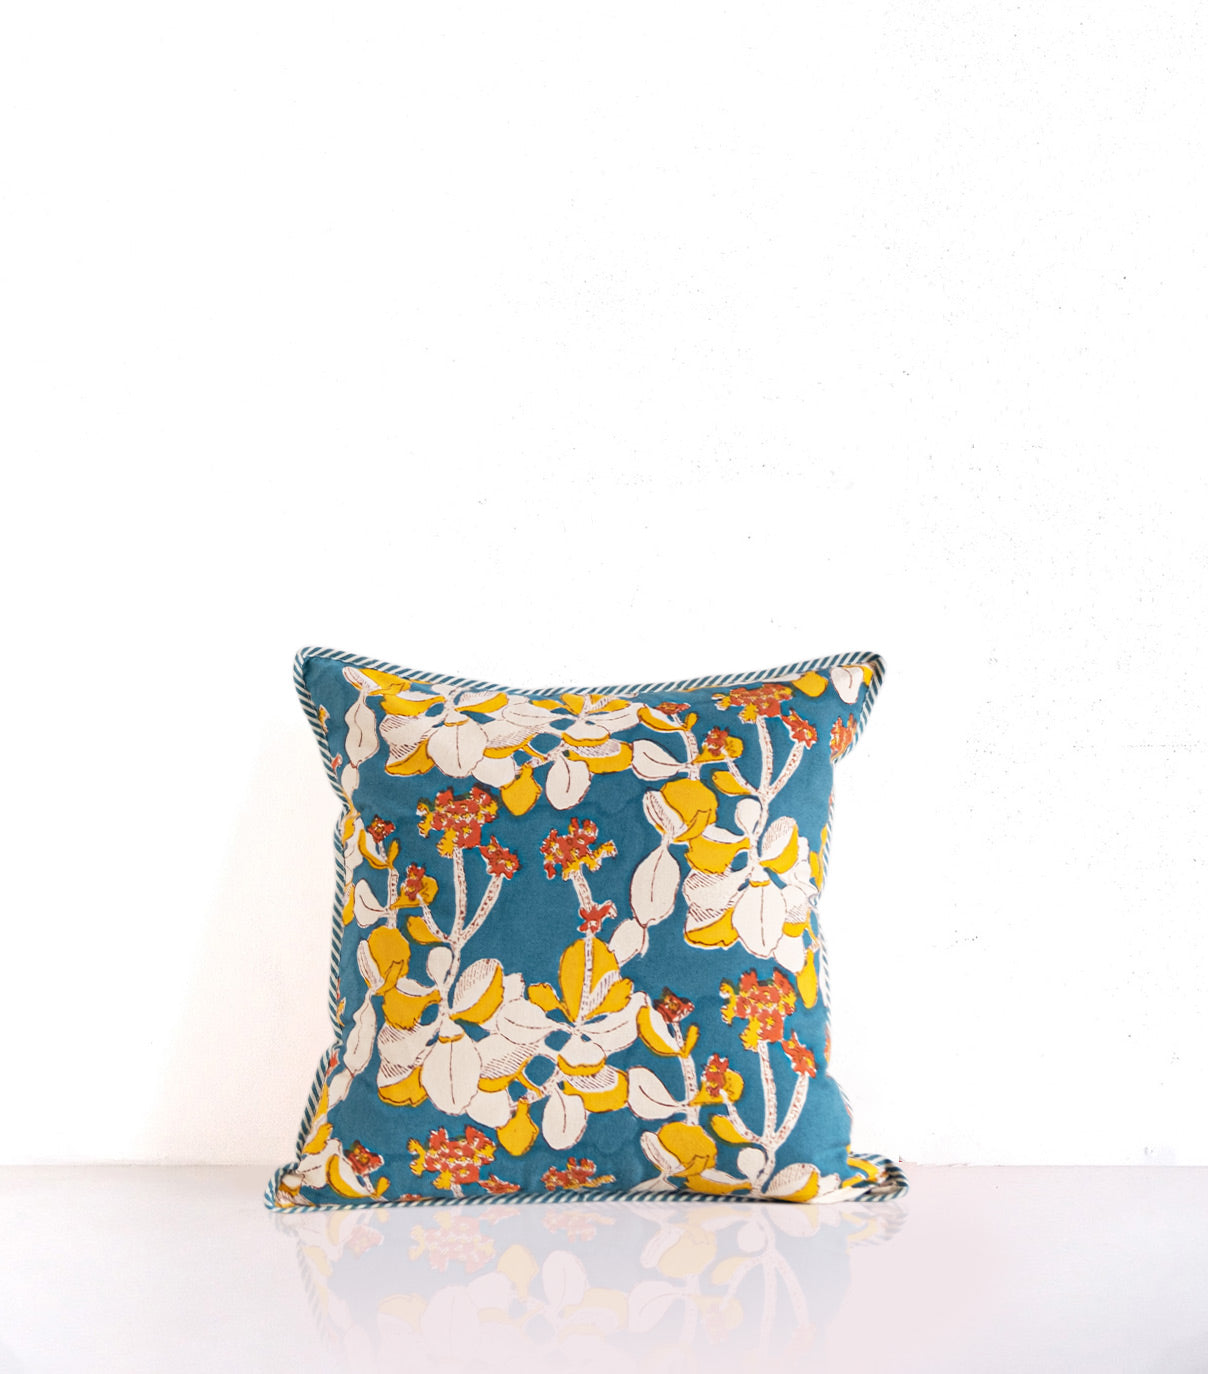 Block printed cotton cushion cover with an iris motif, 40 x 40 cm in a gorgeous deep blue green.